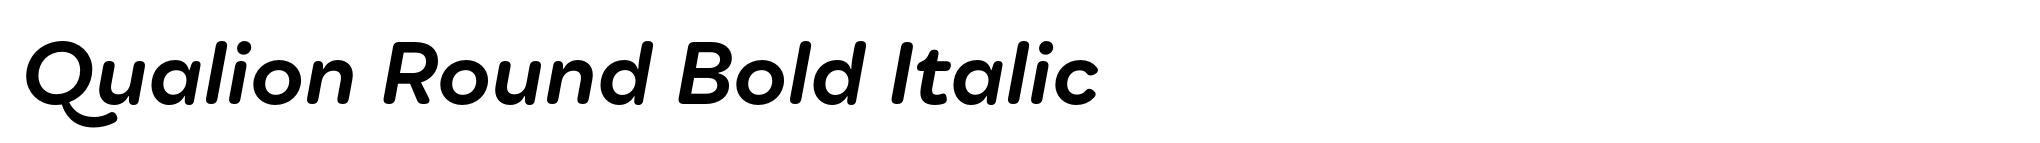 Qualion Round Bold Italic image